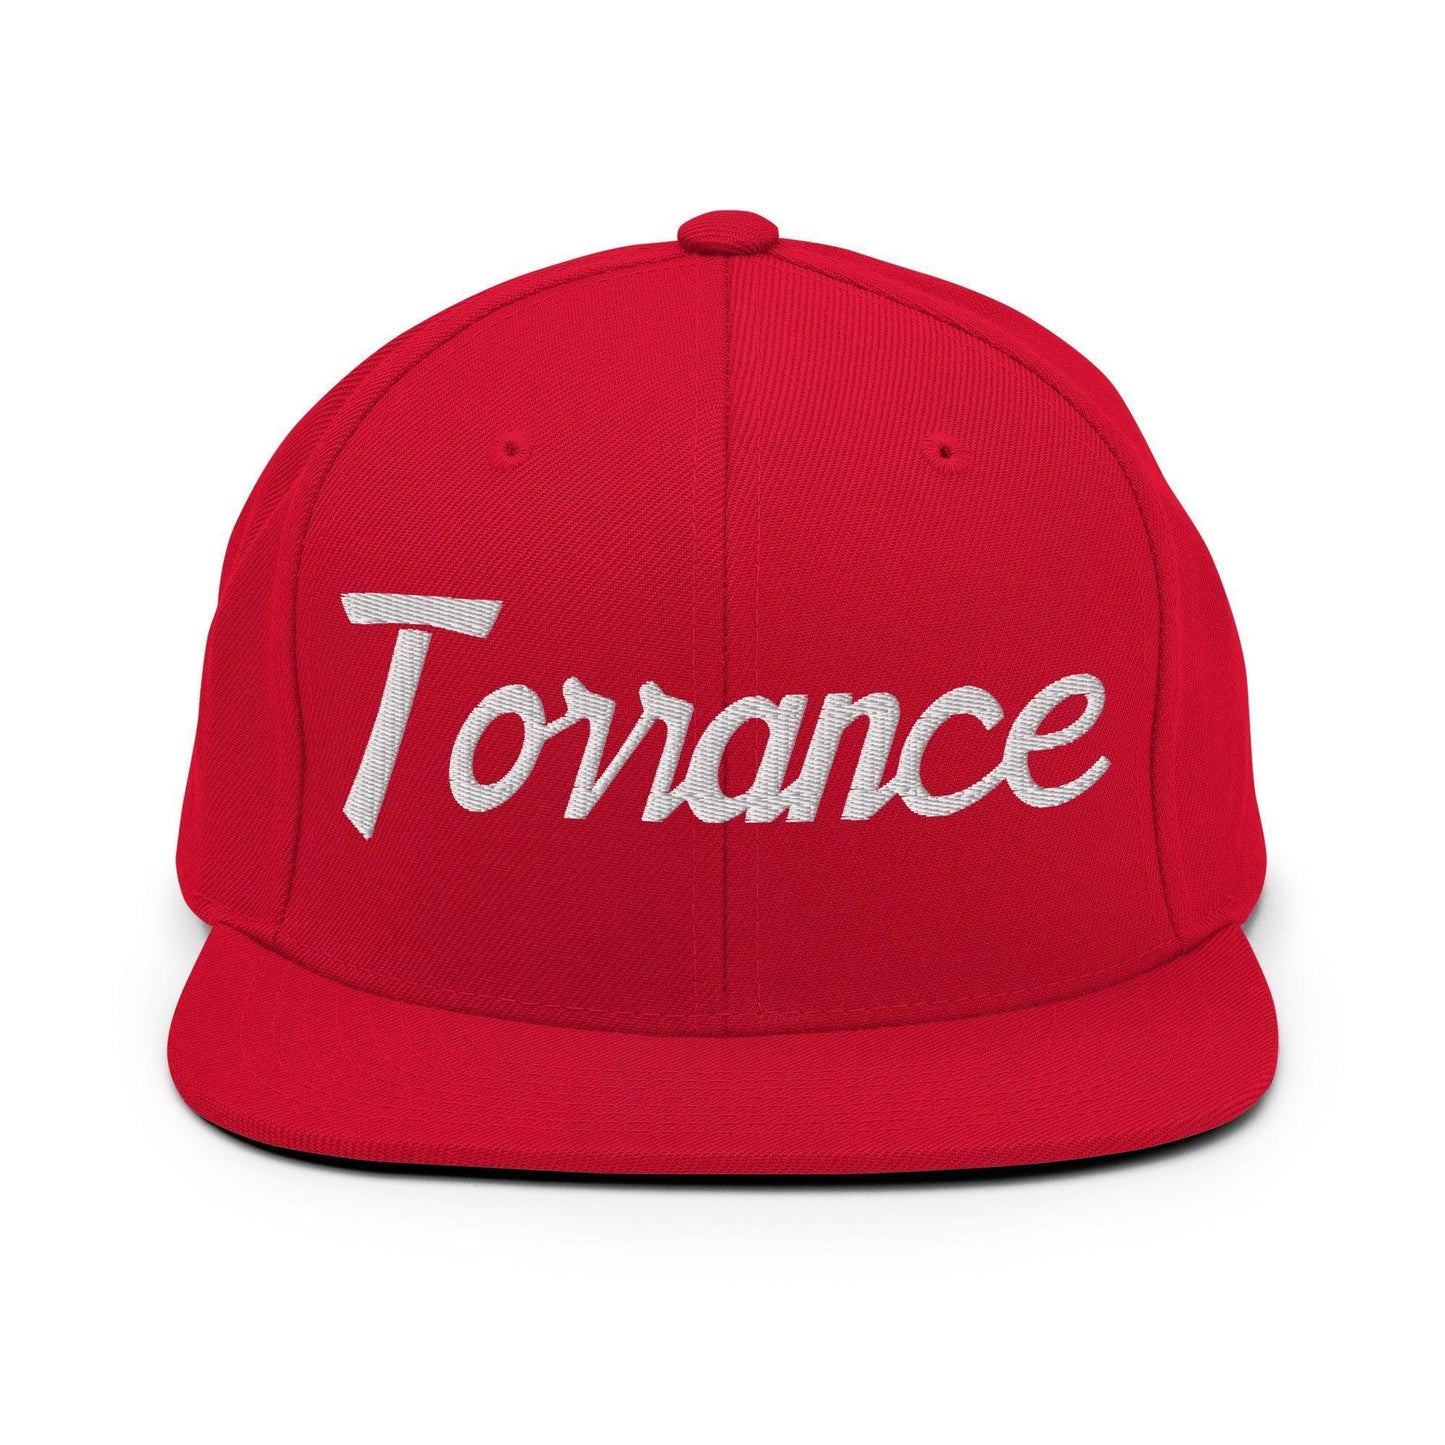 Torrance Script Snapback Hat Red